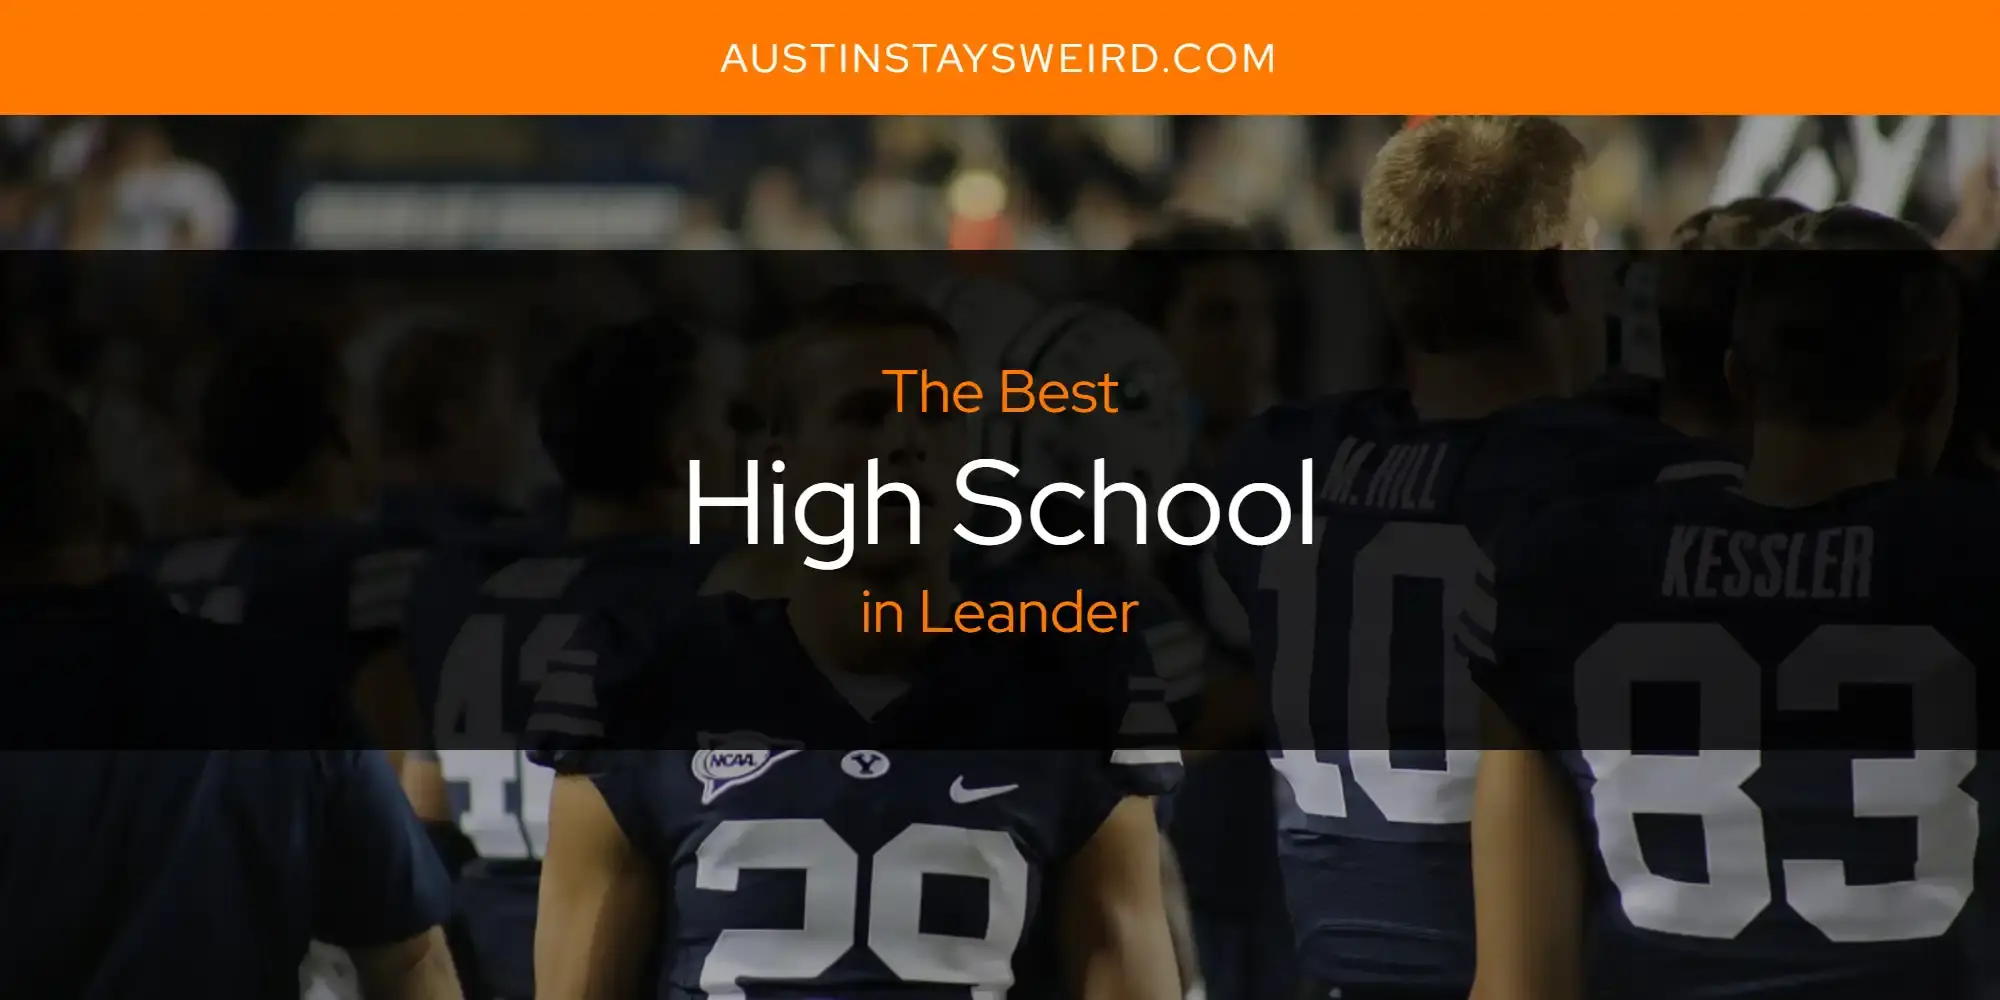 Best High School in Leander? Here's the Top 8